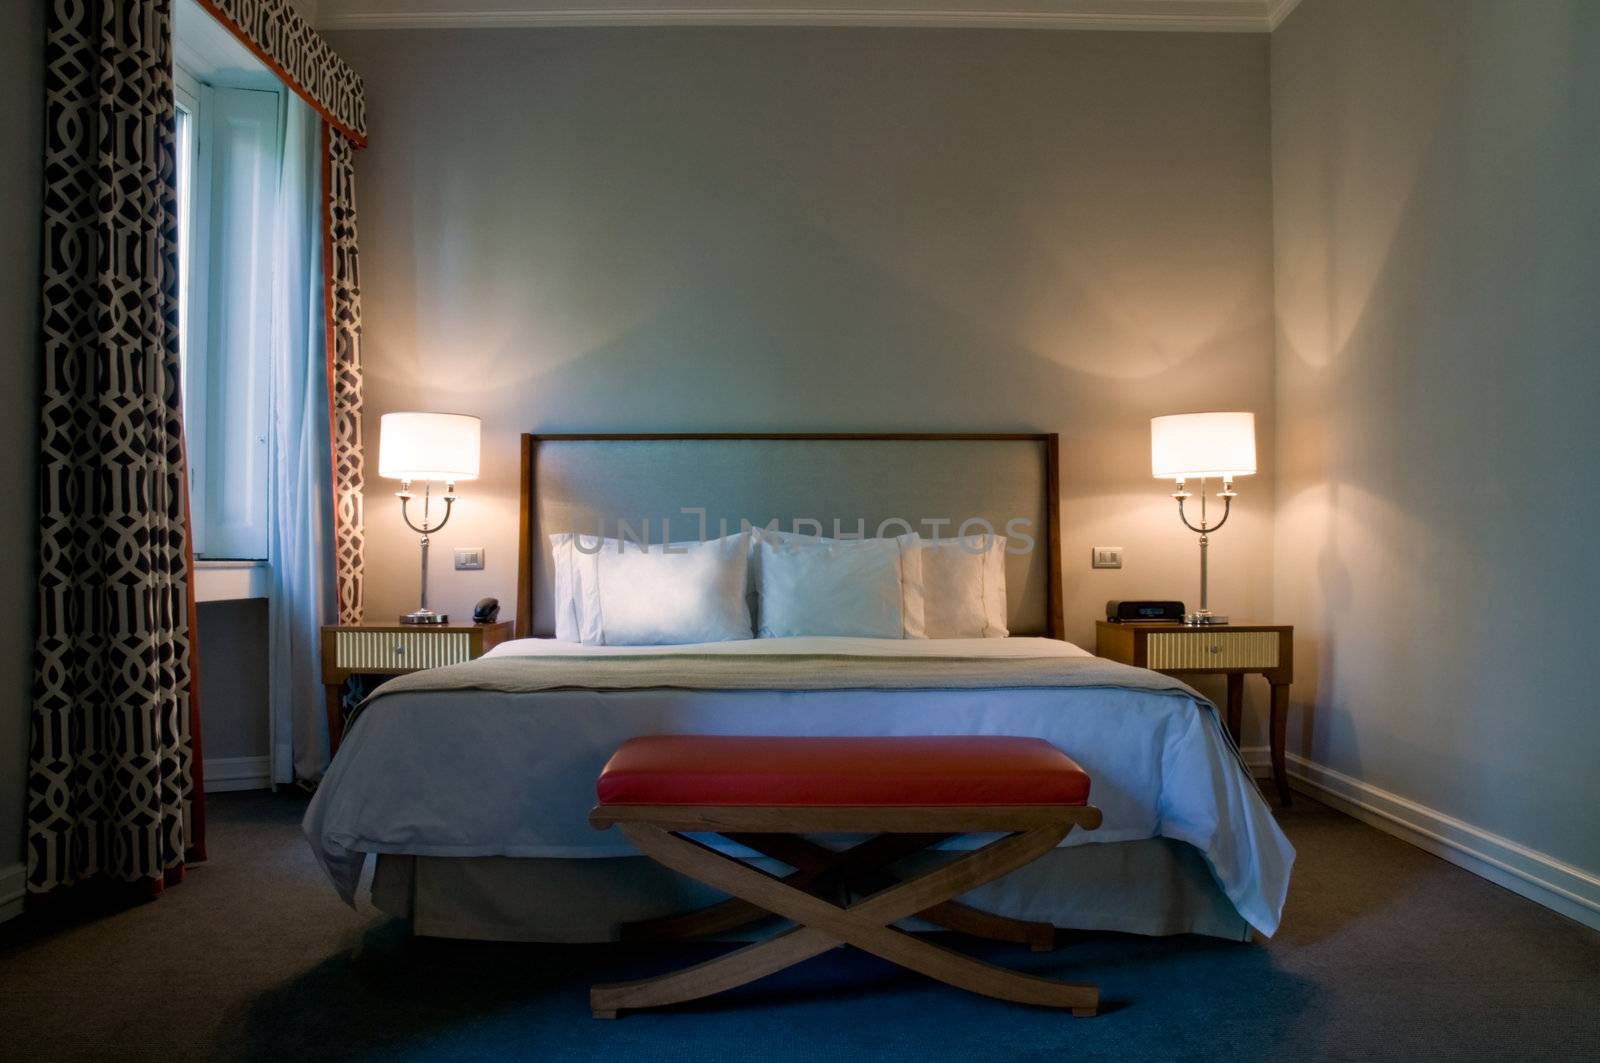 Bedroom of a elegant 5 star hotel by 3523Studio